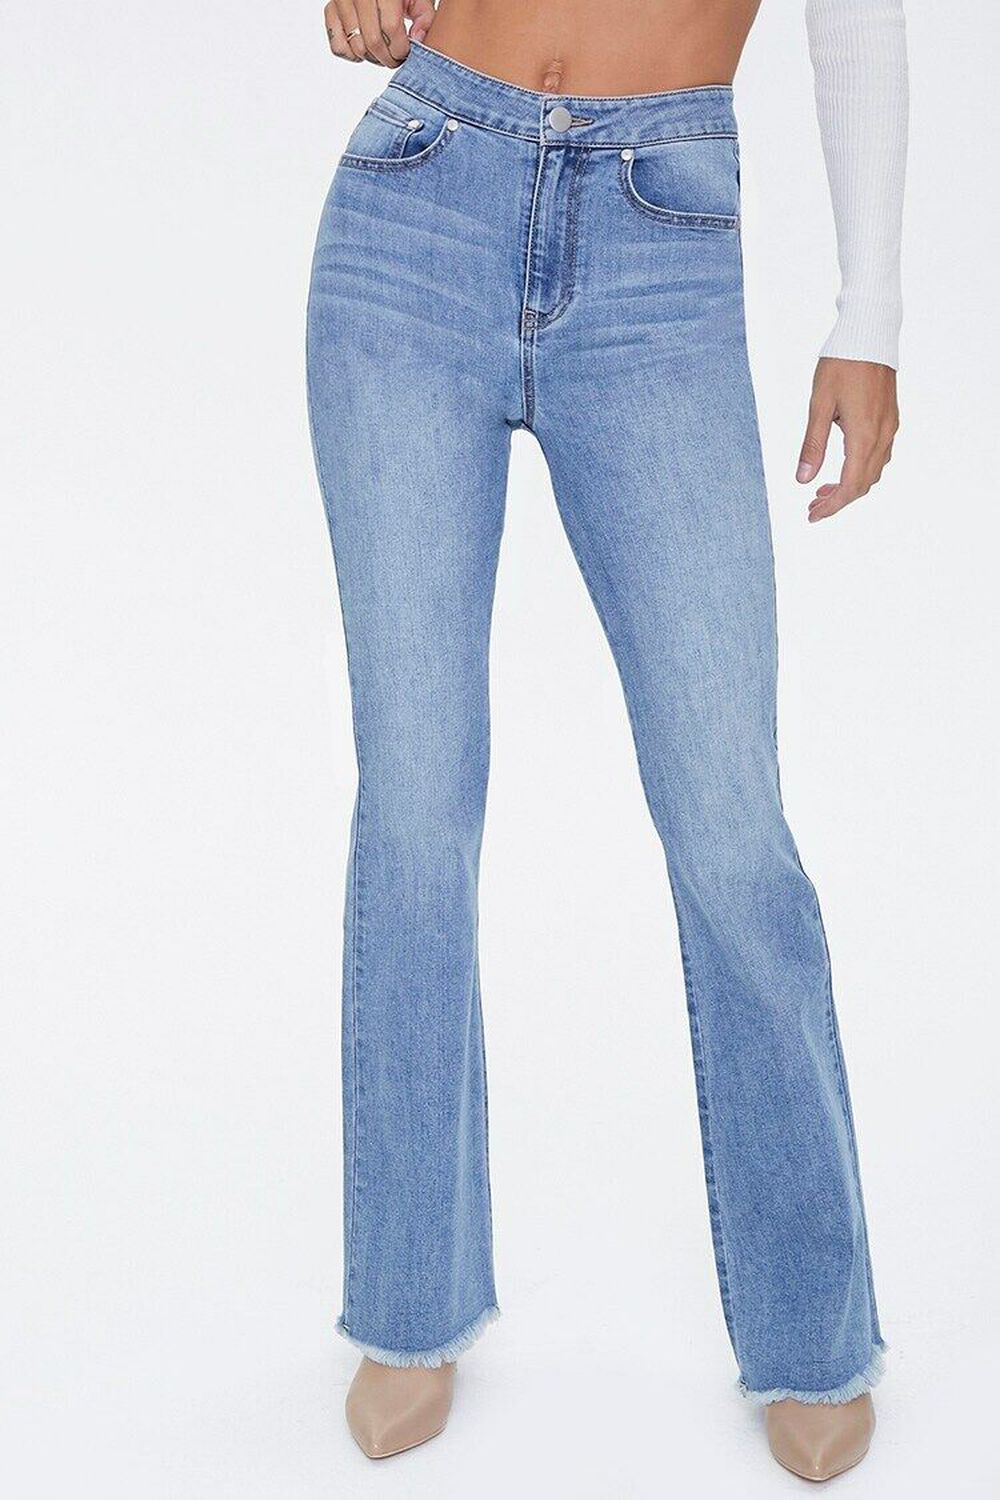 MEDIUM DENIM Lace-Back Flare Jeans, image 2